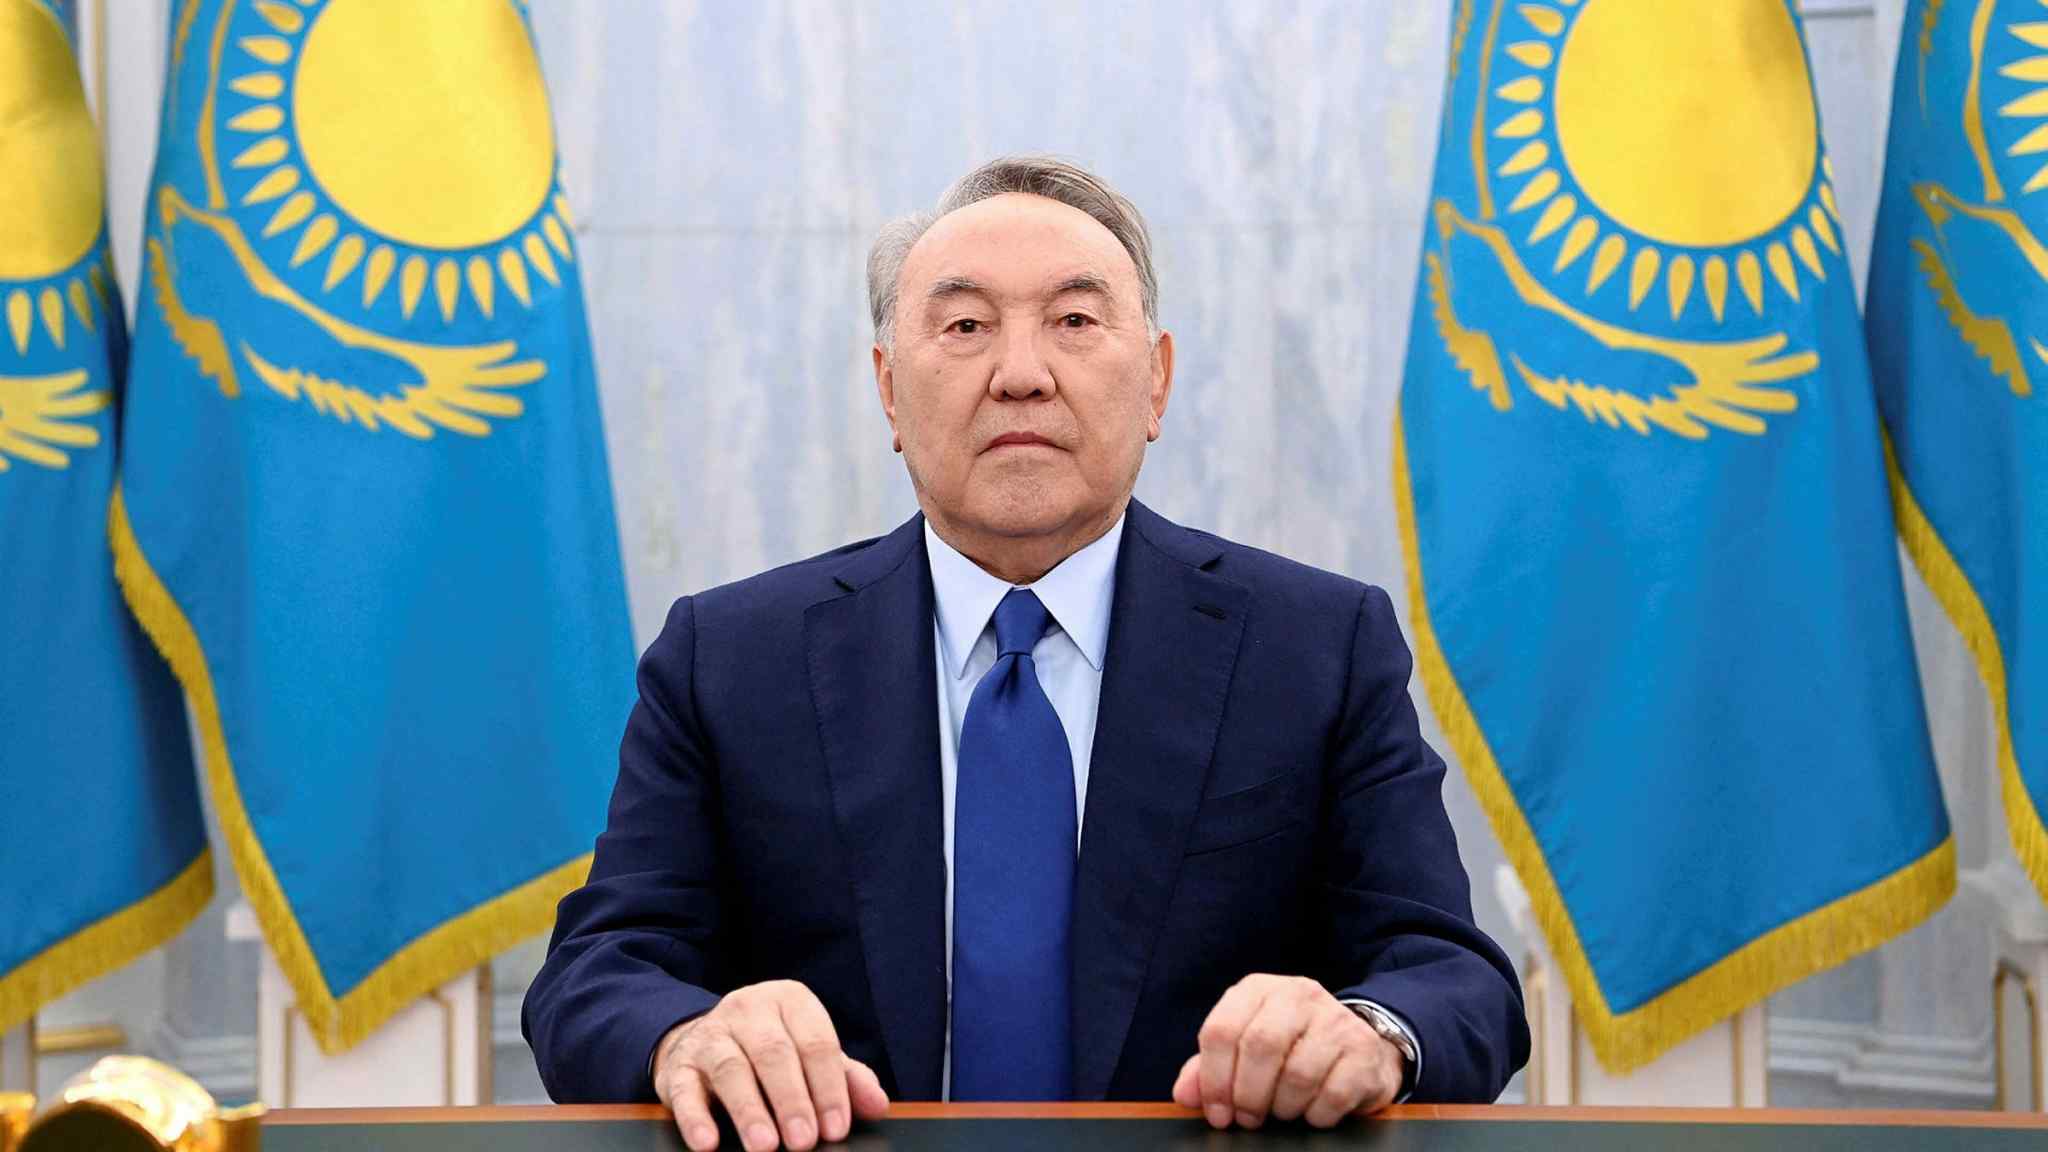 Nazarbayev emerges to deliver TV address to Kazakhstan